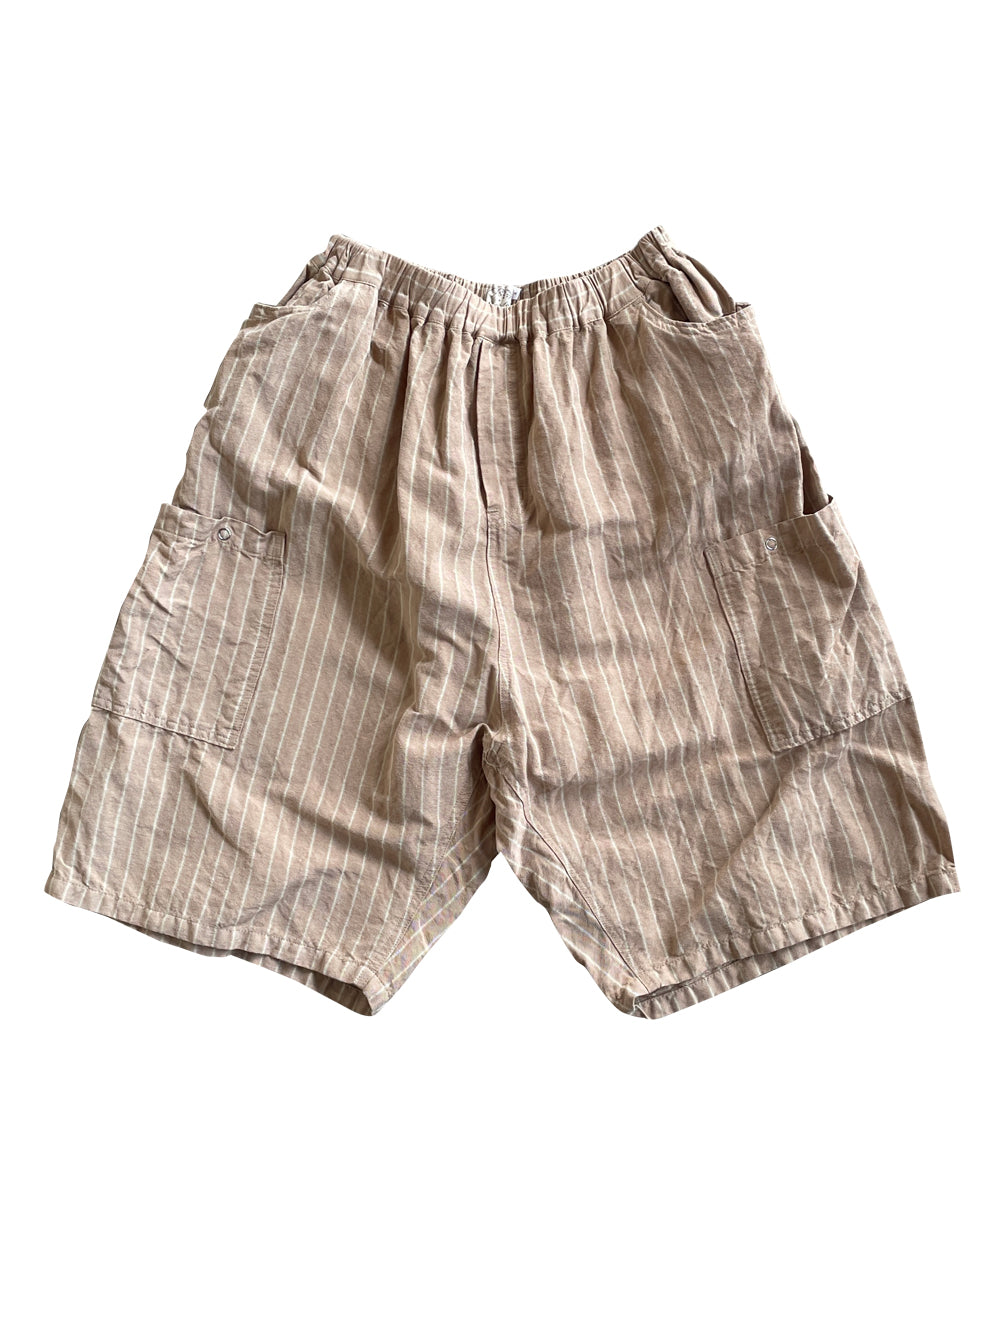 Swoon Beige Stripe Shorts - Shan and Toad - Luxury Kidswear Shop